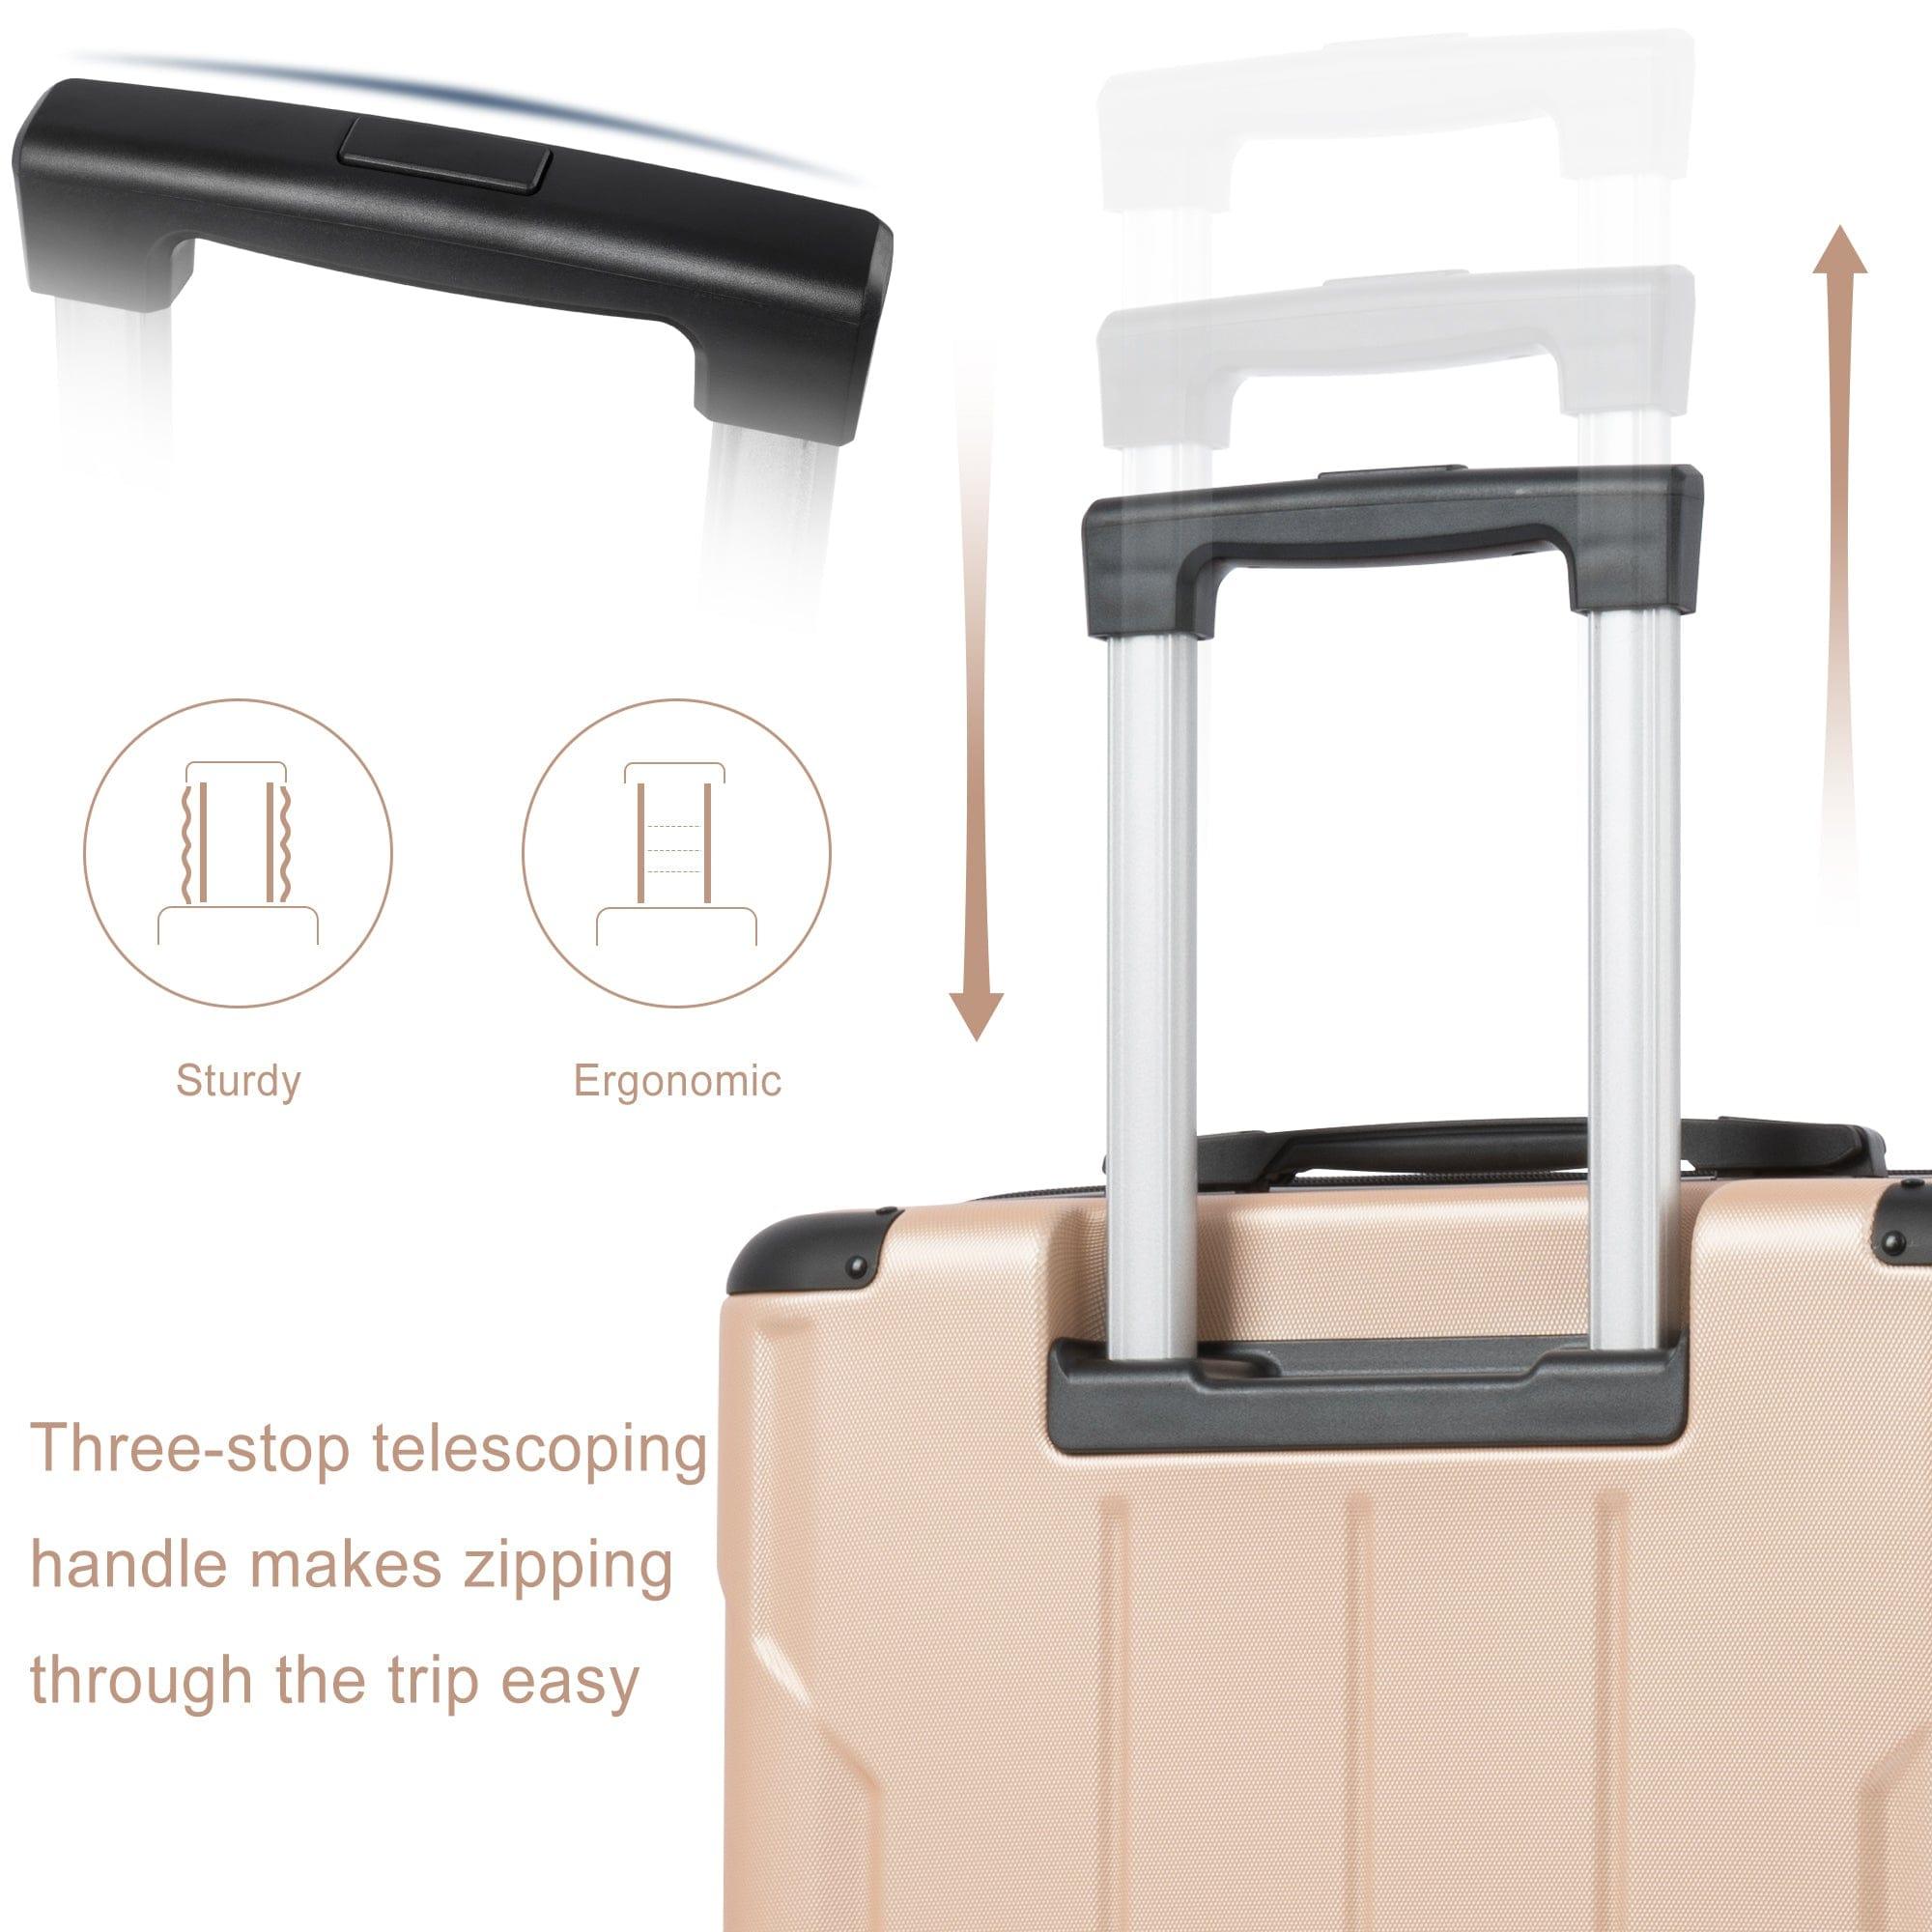 Shop Hardshell Luggage Spinner Suitcase with TSA Lock Lightweight Expandable 24'' (Single Luggage) Mademoiselle Home Decor